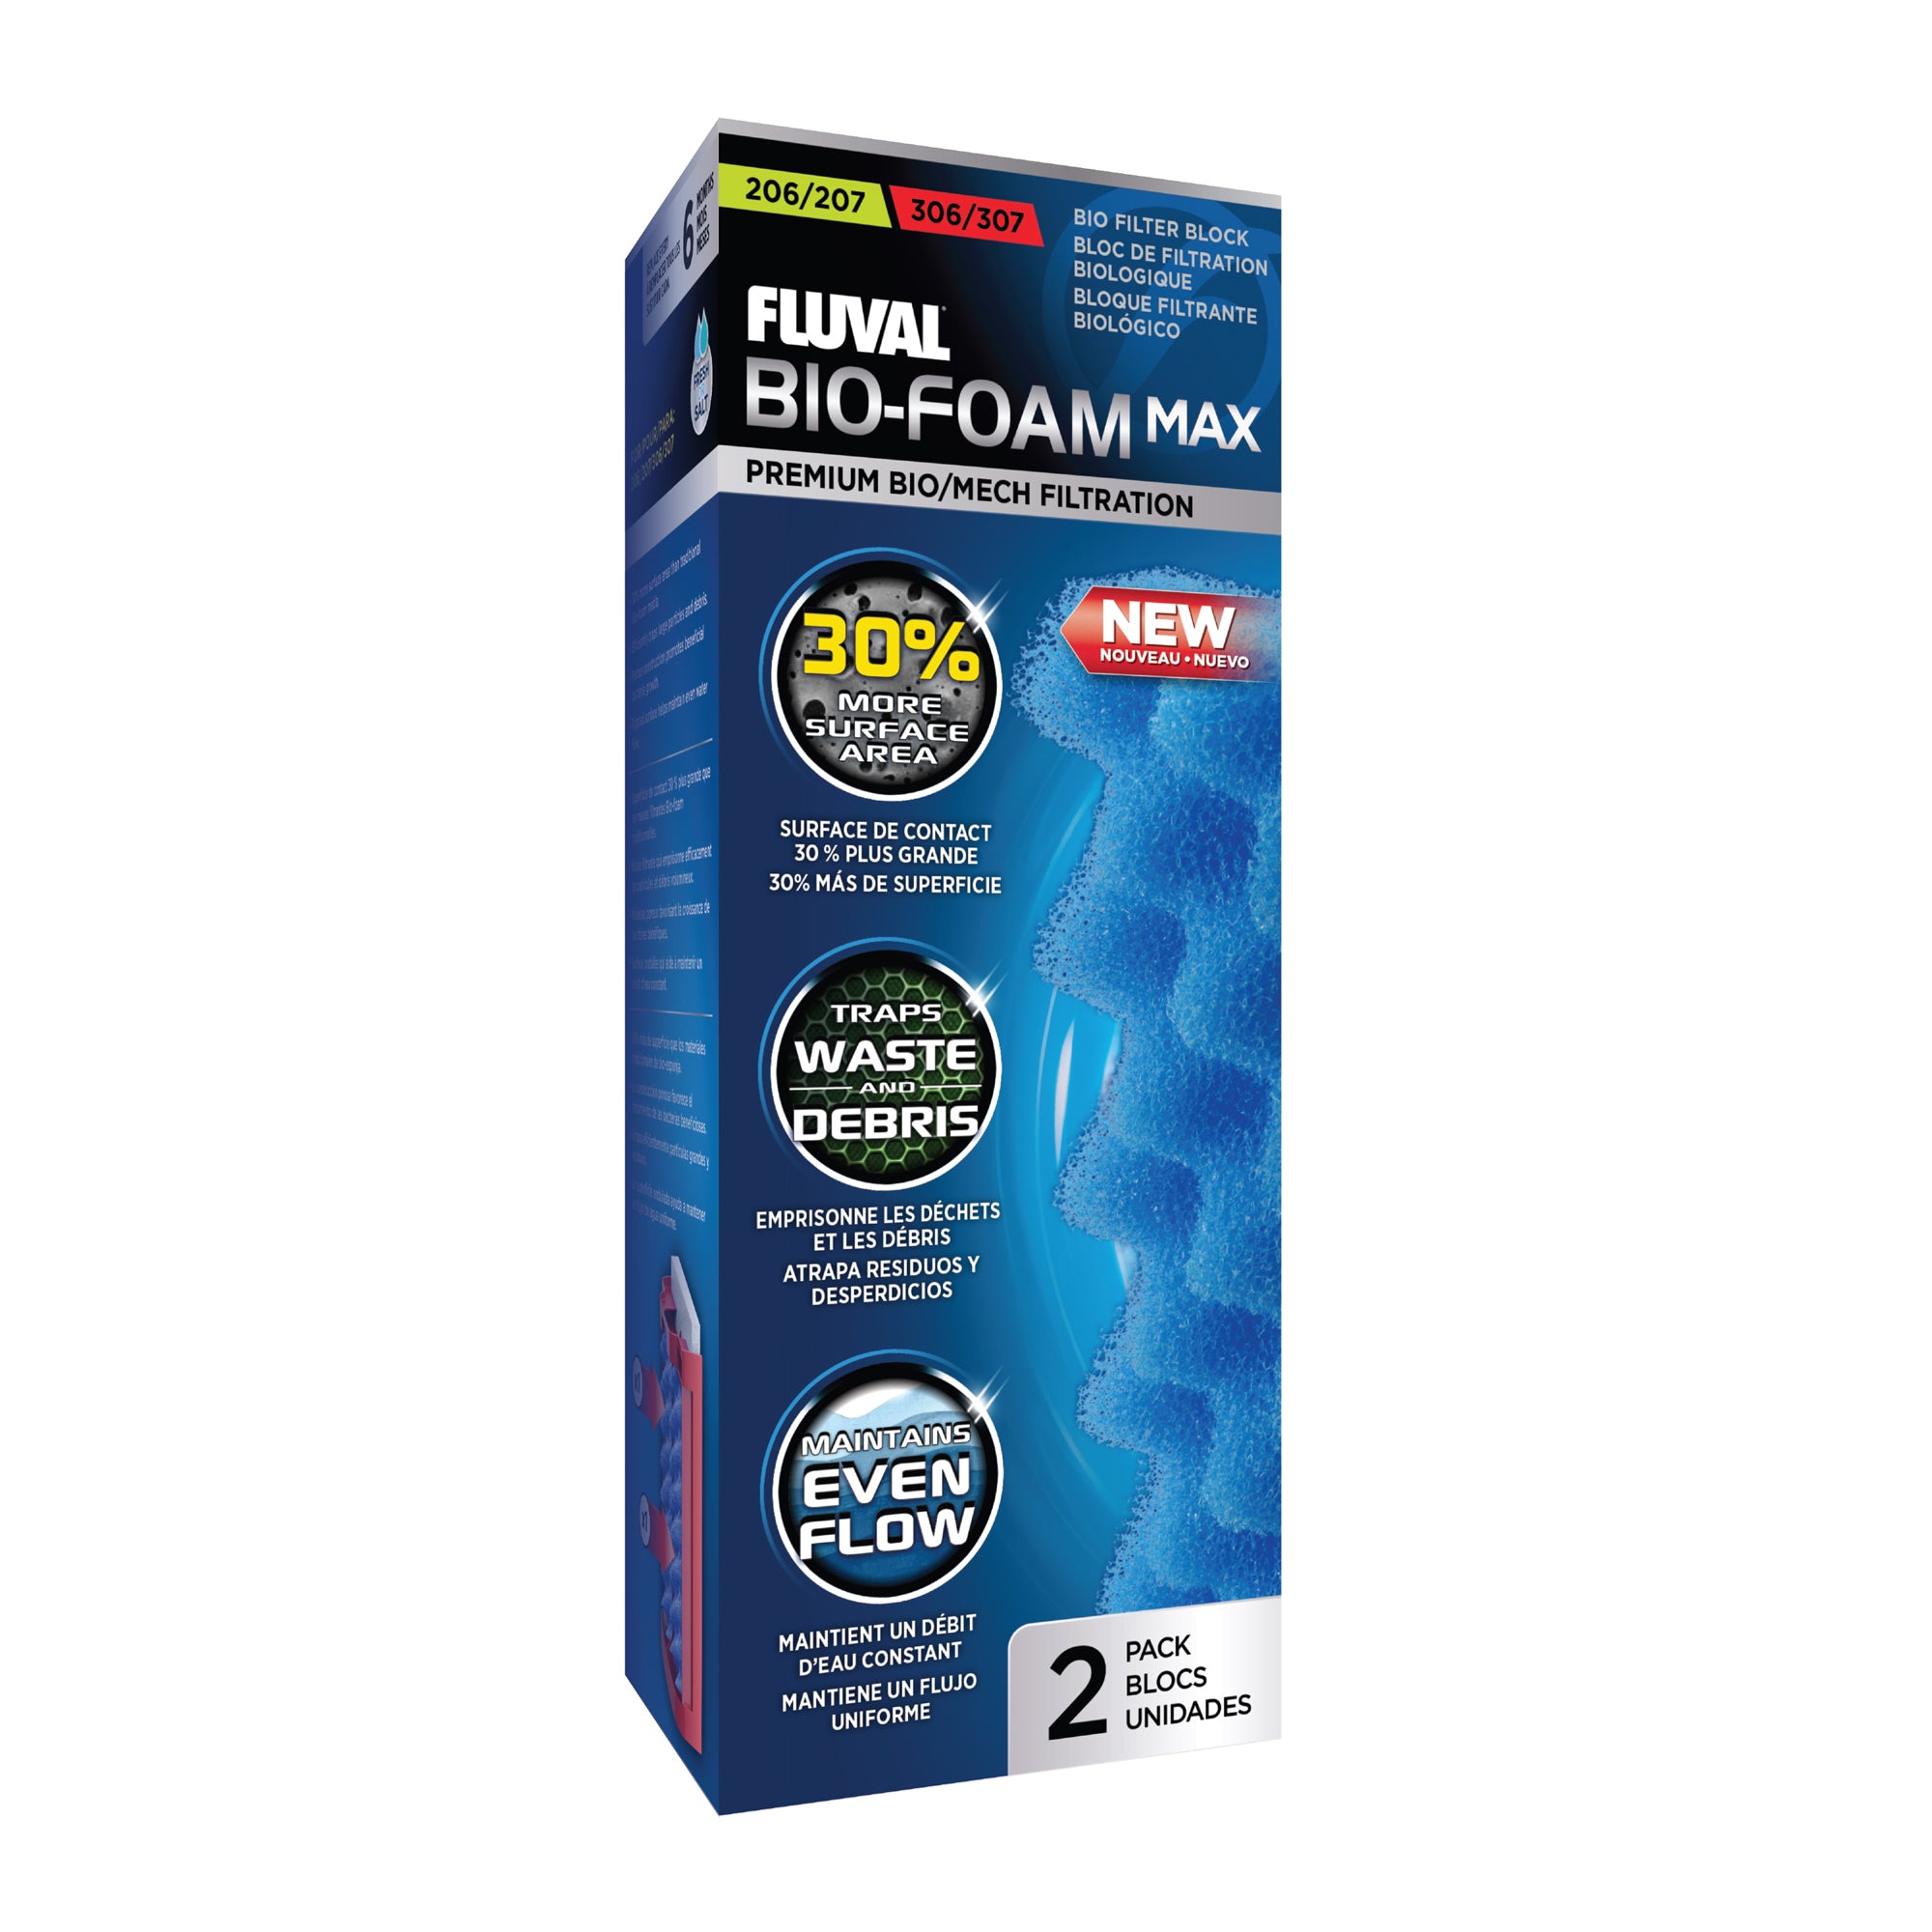 Fluval Bio-Foam Max 207/307 and 206/306 - 2 pack